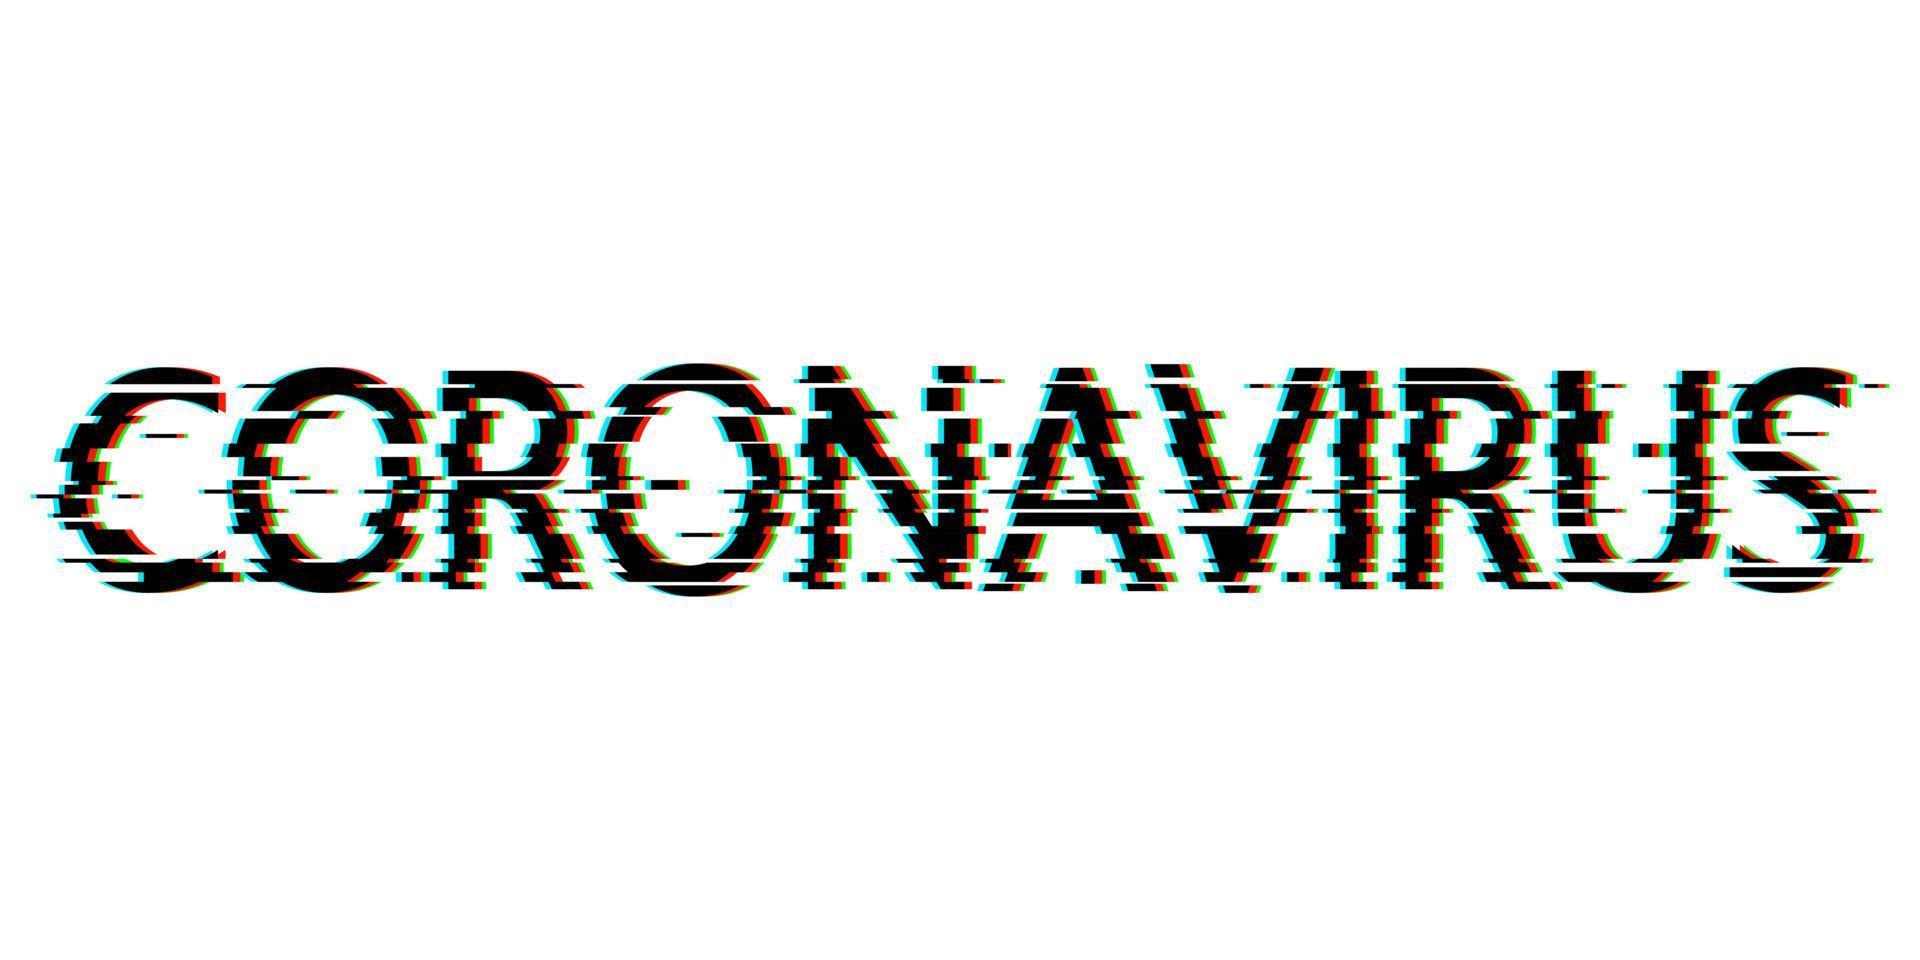 Digital glitch effect word Coronavirus on white background. Virus concept vector